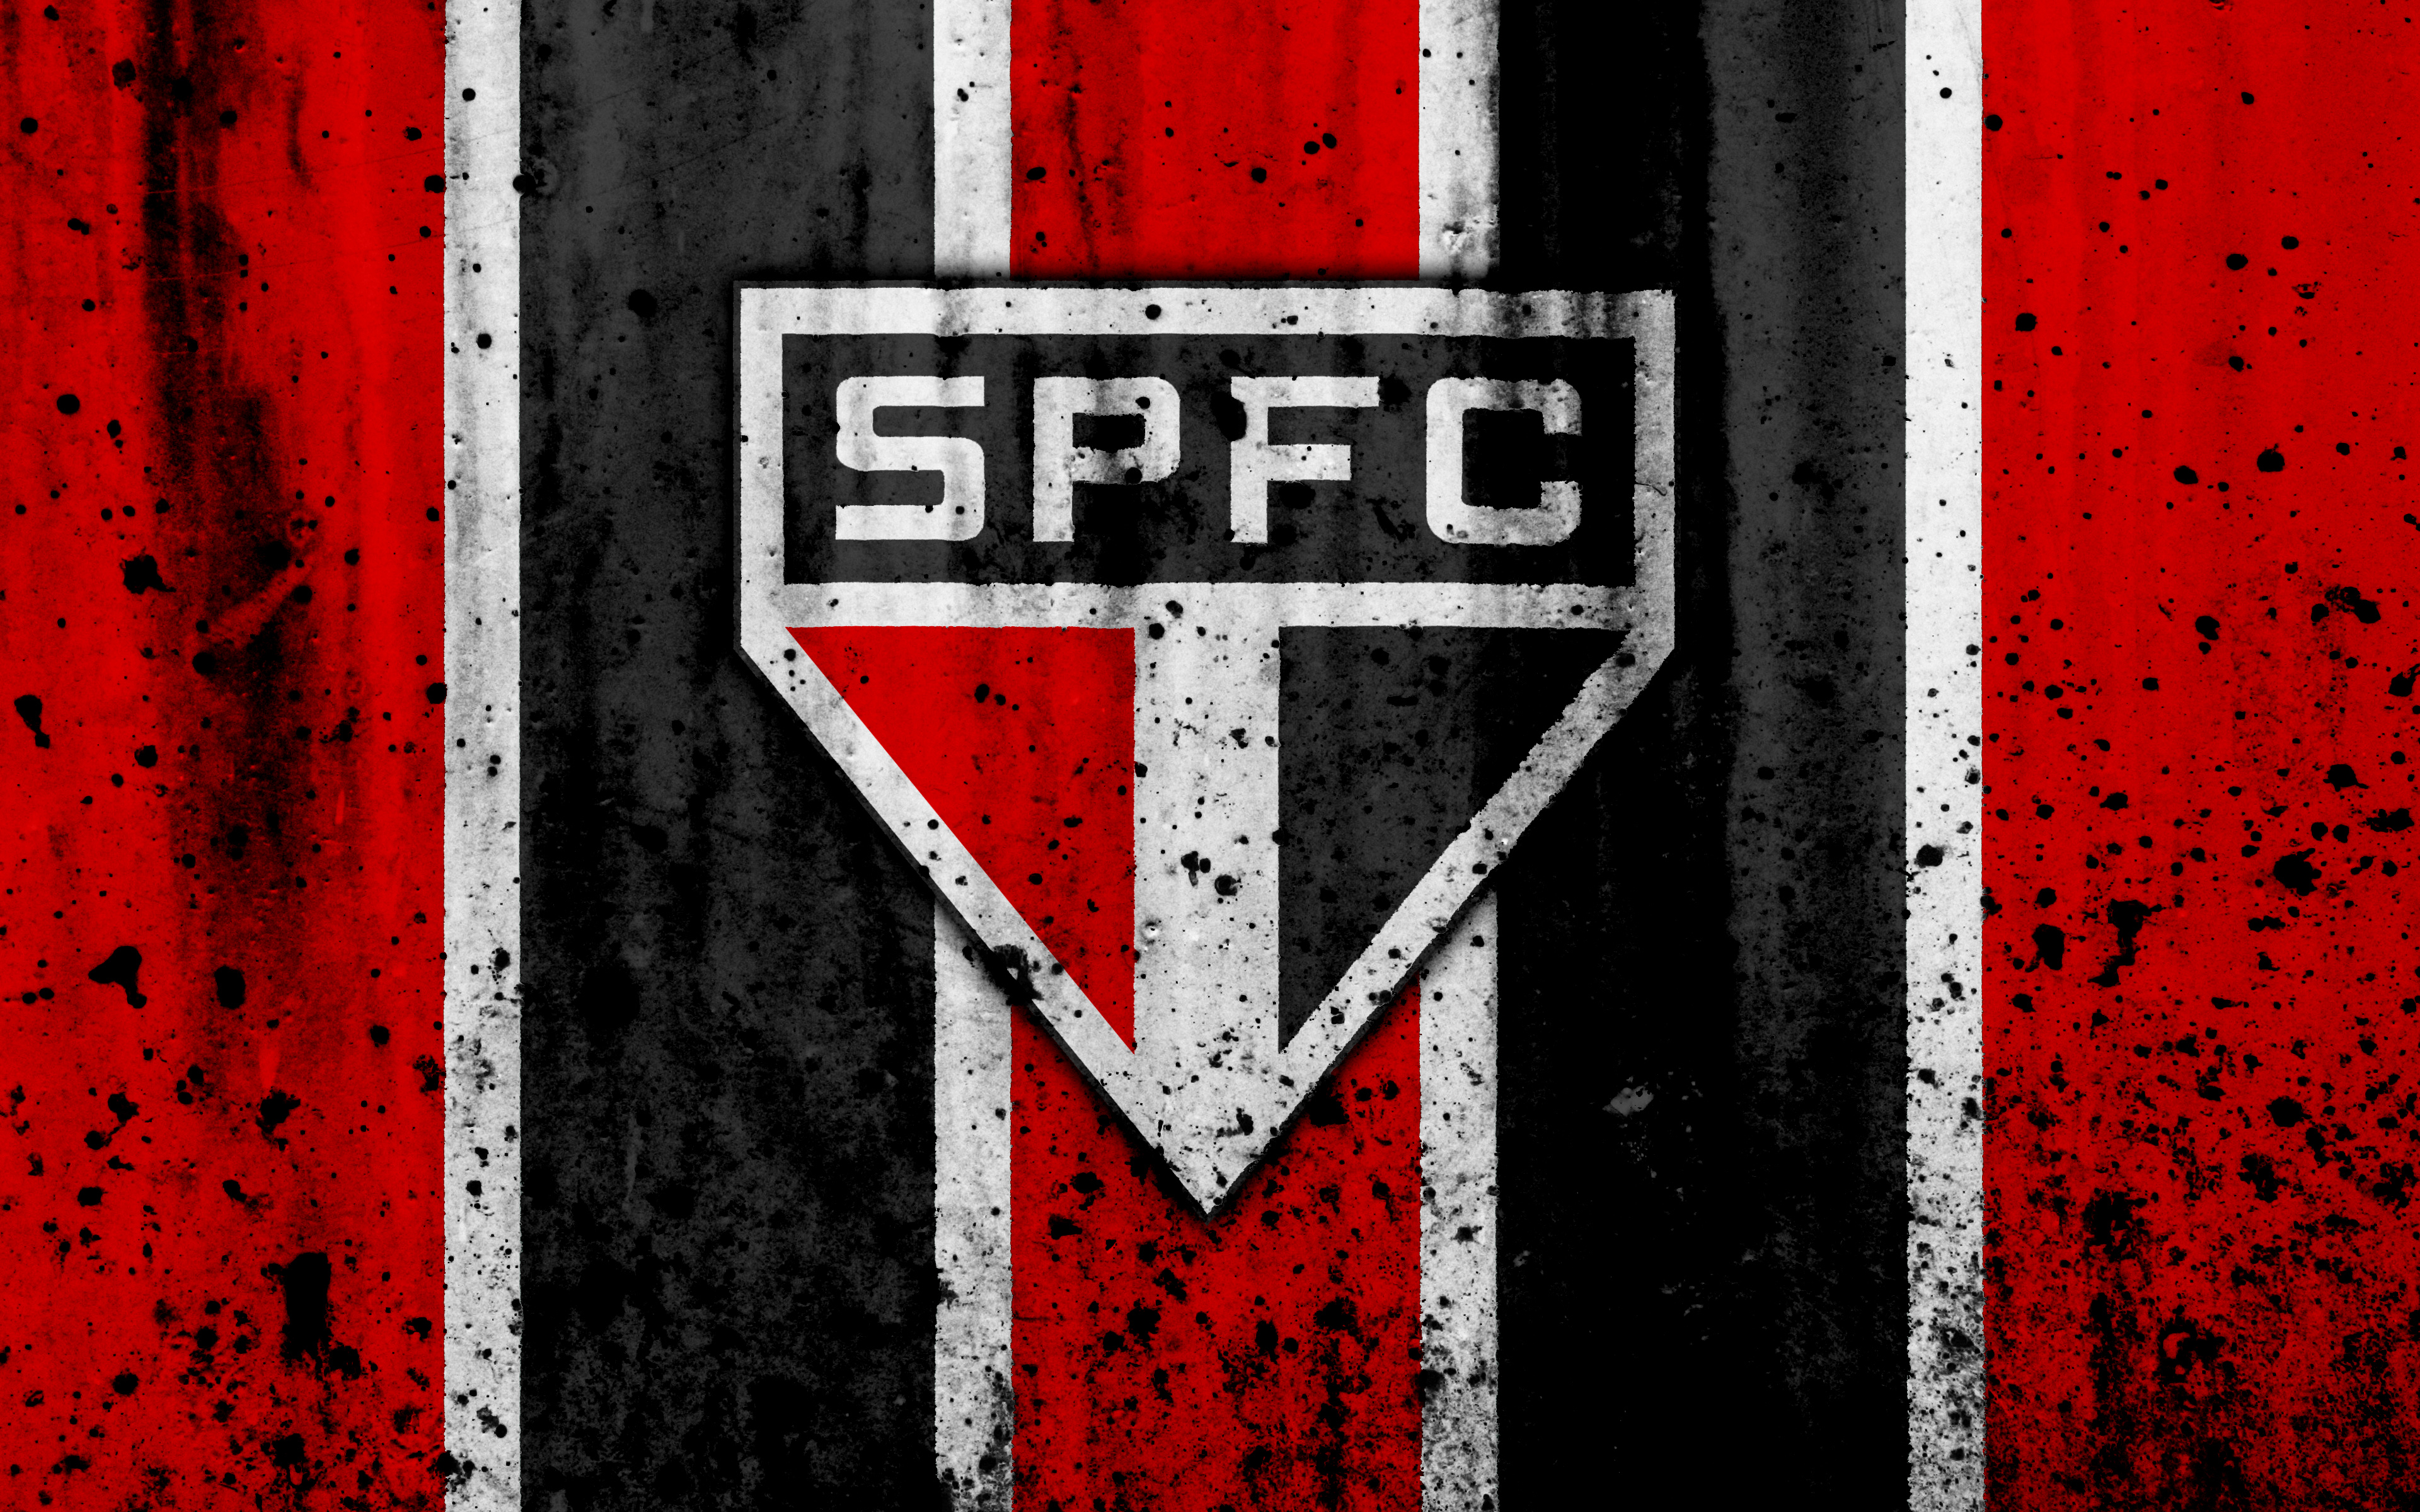 Sports São Paulo FC HD Wallpaper | Background Image